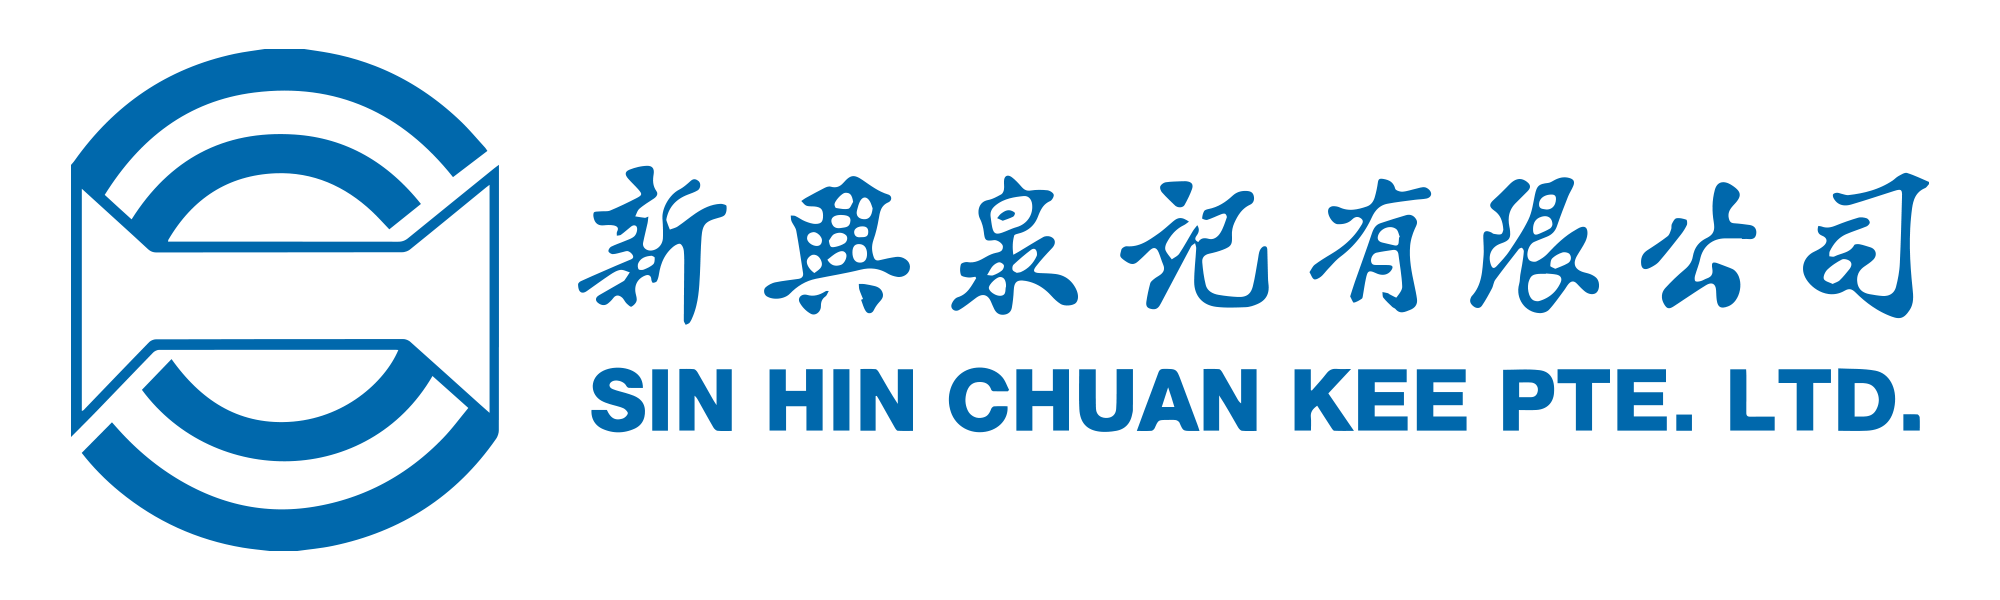 Sin Hin Chuan Kee